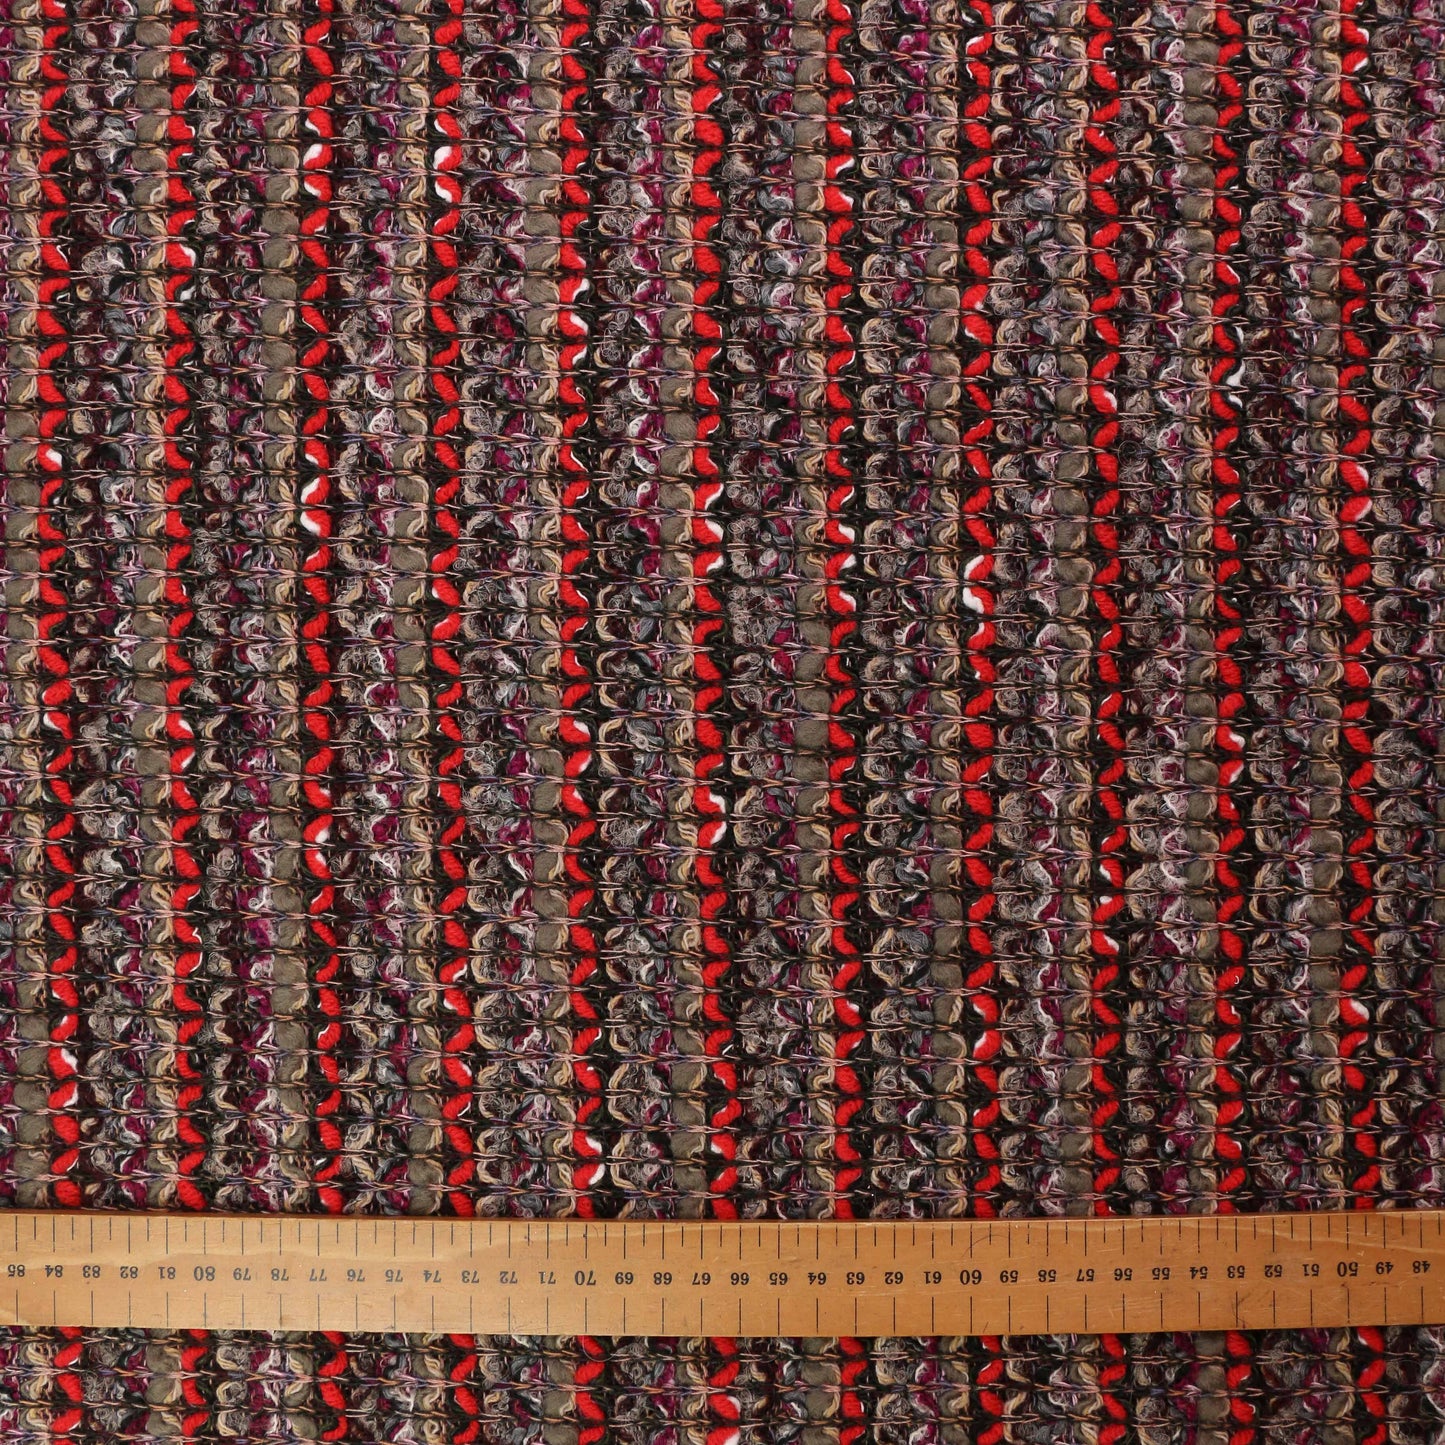 Boucle Jersey Fabric - Mustard, plum, red